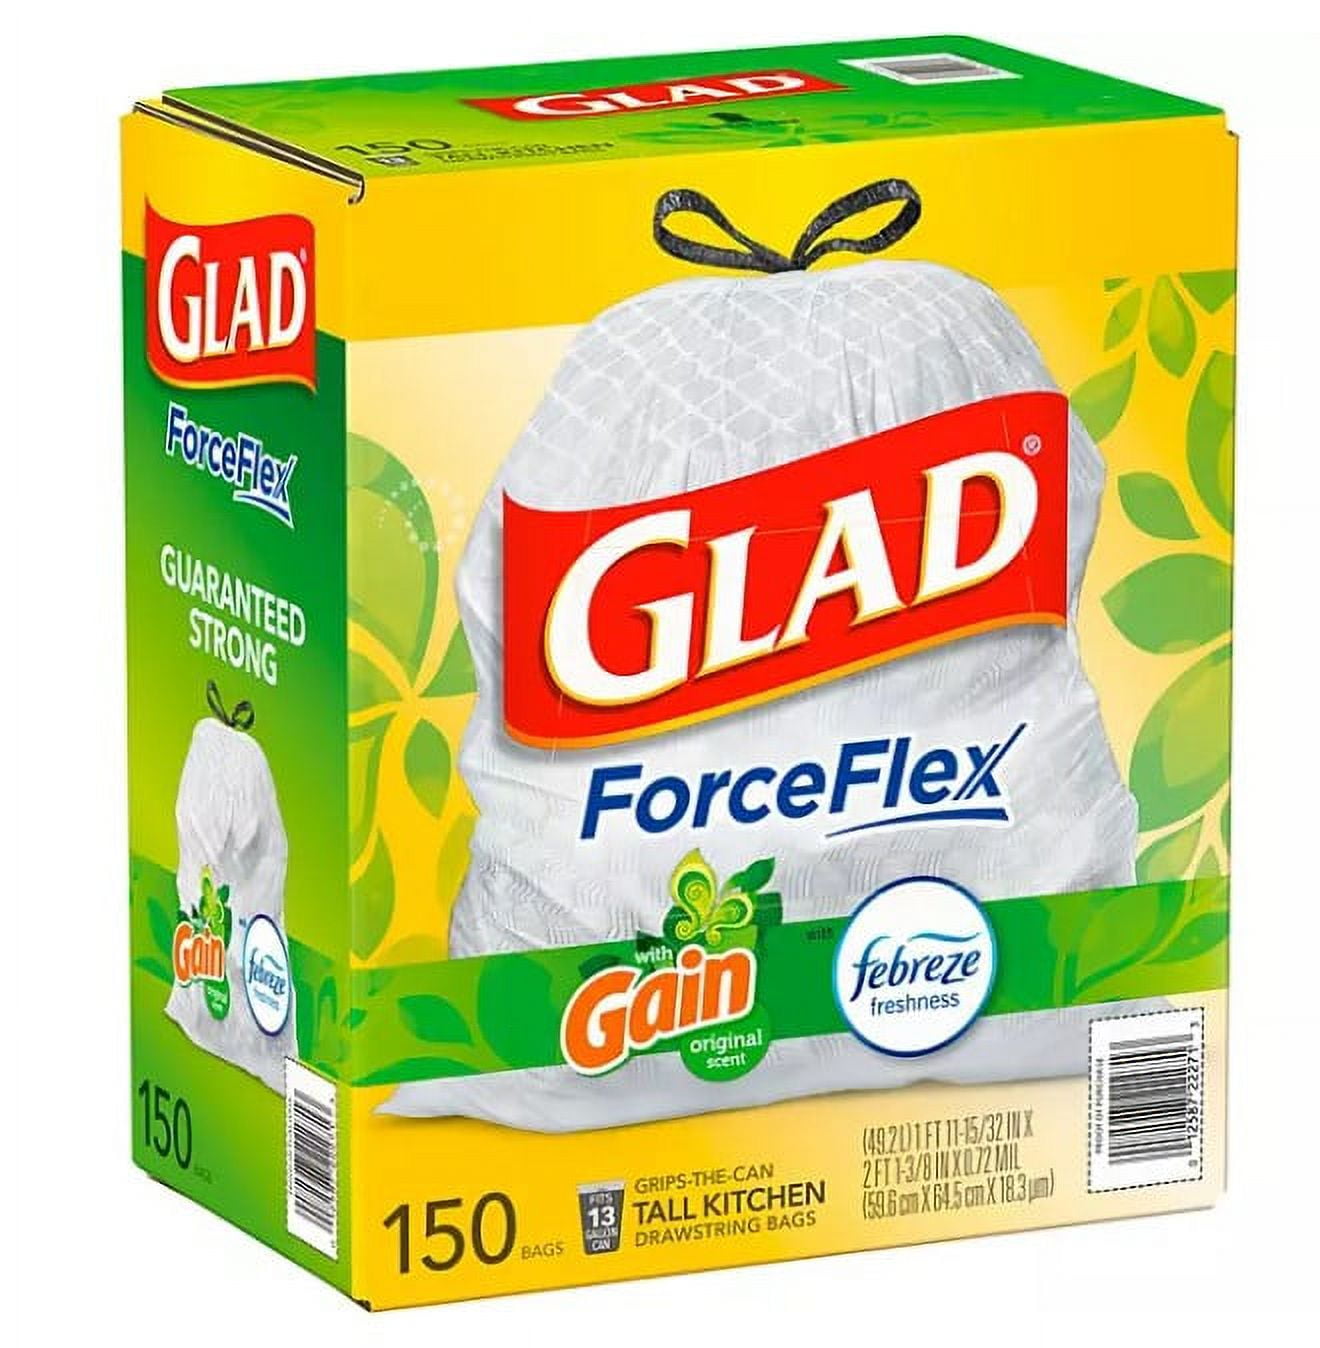 Glad ForceFlex Tall Kitchen Trash Bags, 13 Gallon, Gain Lavender with Febreze - 120 ct